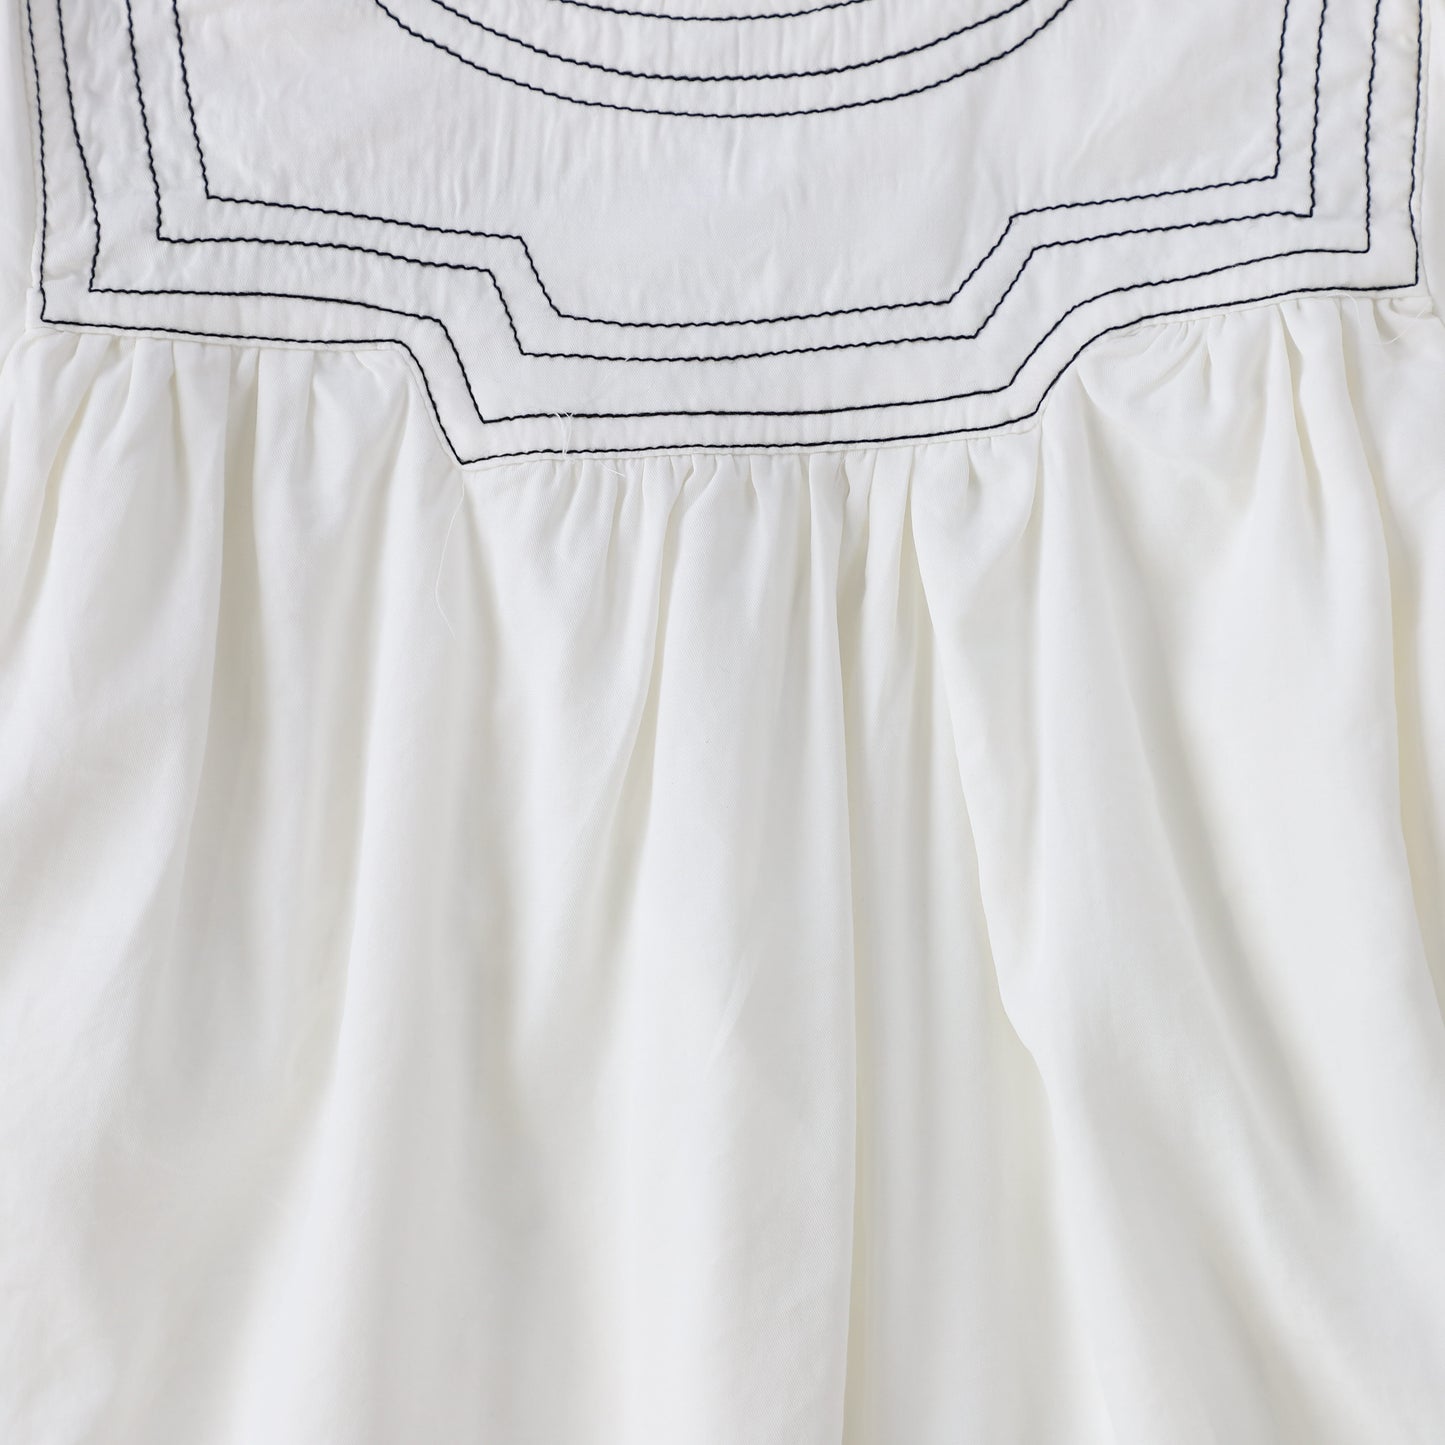 BACE COLLECTION WHITE MUSHROOM TRIM DRESS [Final Sale]